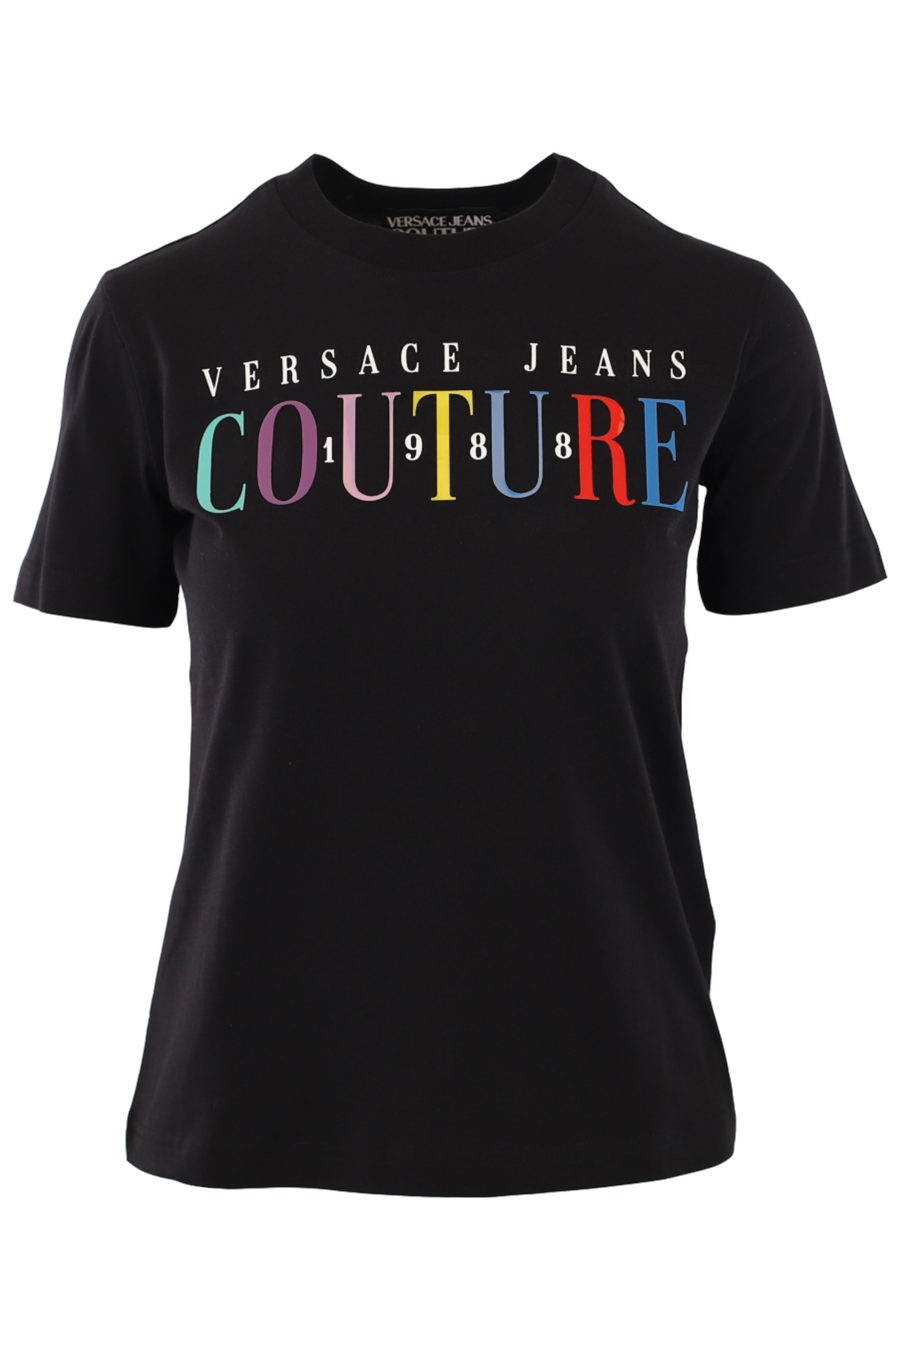 Camiseta negra con logo multicolor centro - IMG 0828